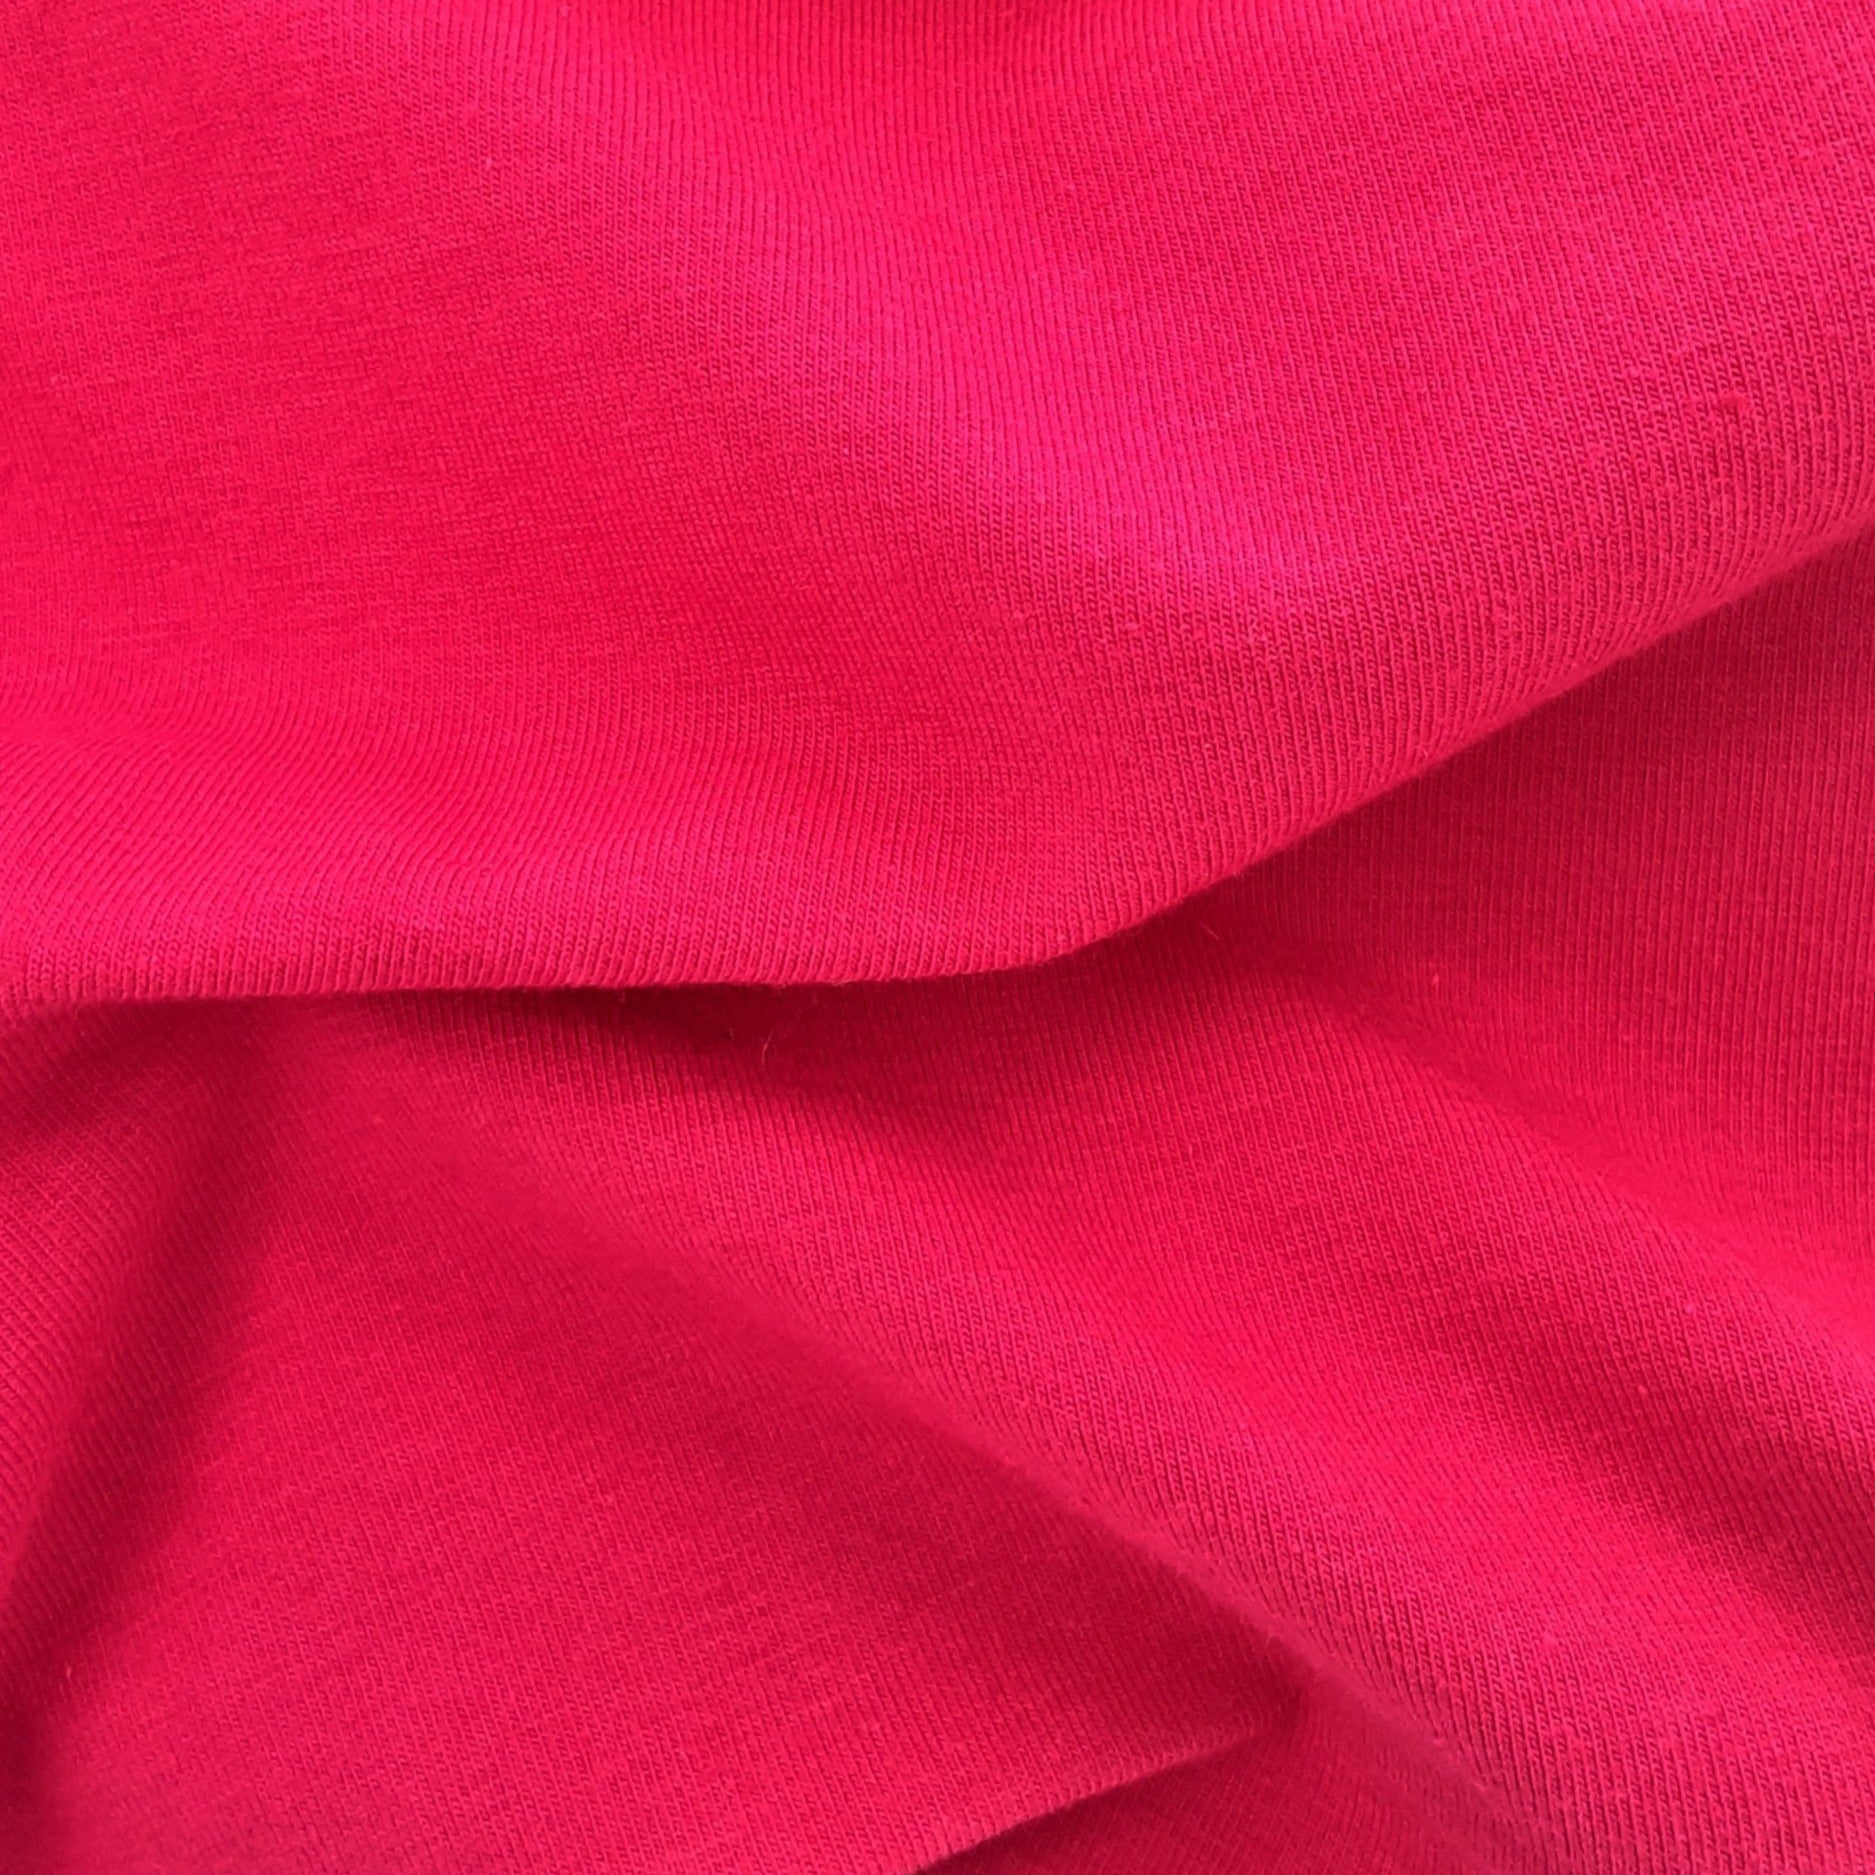 Dark Fuchsia 10 Ounce Cotton/Spandex Jersey Knit Fabric - SKU 2853D 